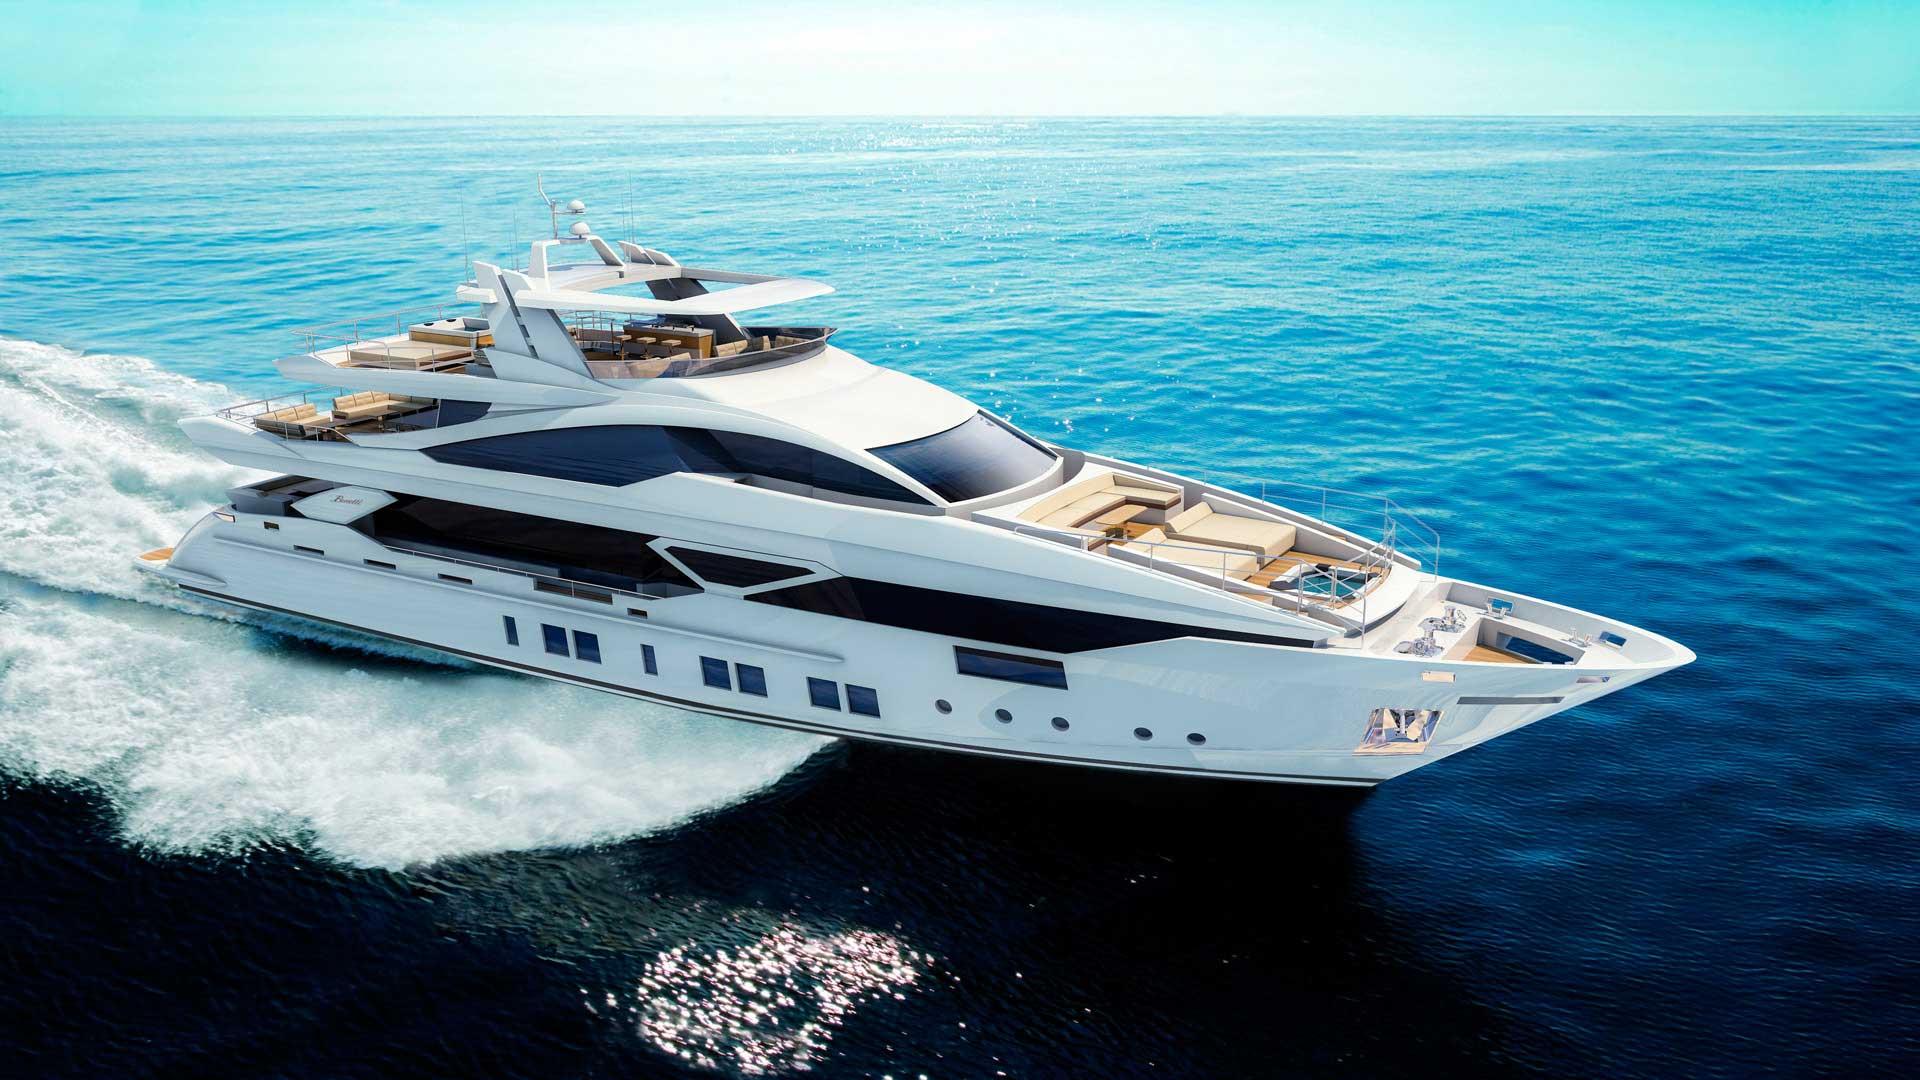 benetti luxury yacht price